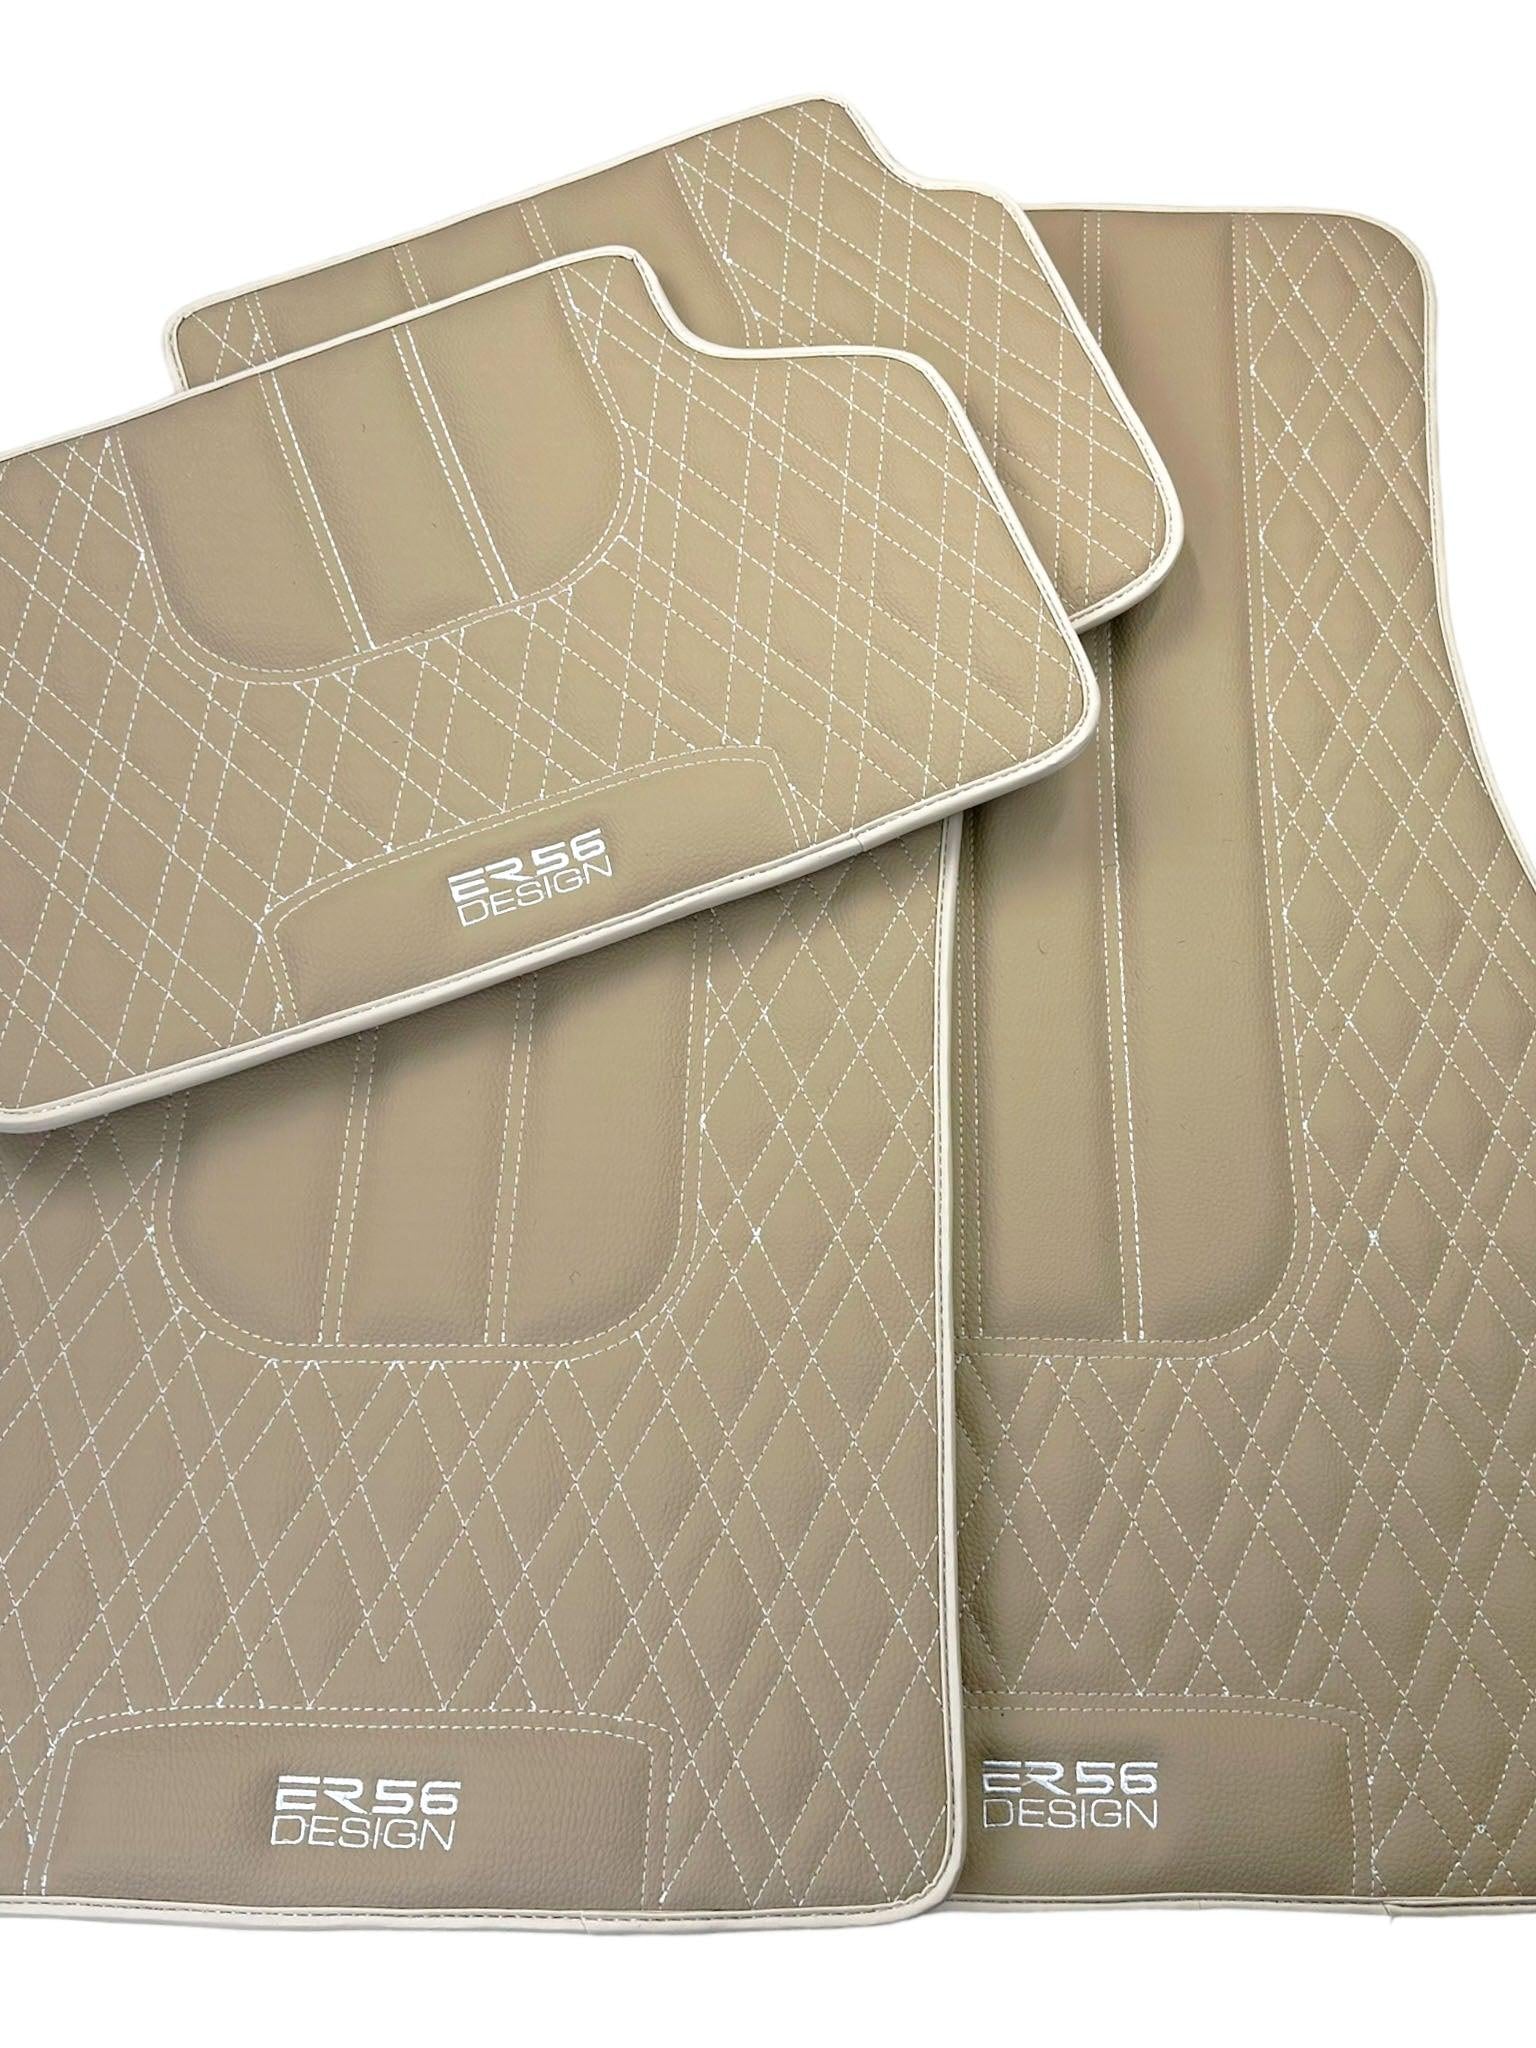 Beige Leather Floor Floor Mats For BMW 3 Series E93 | Fighter Jet Edition Brand |Sky Blue Trim